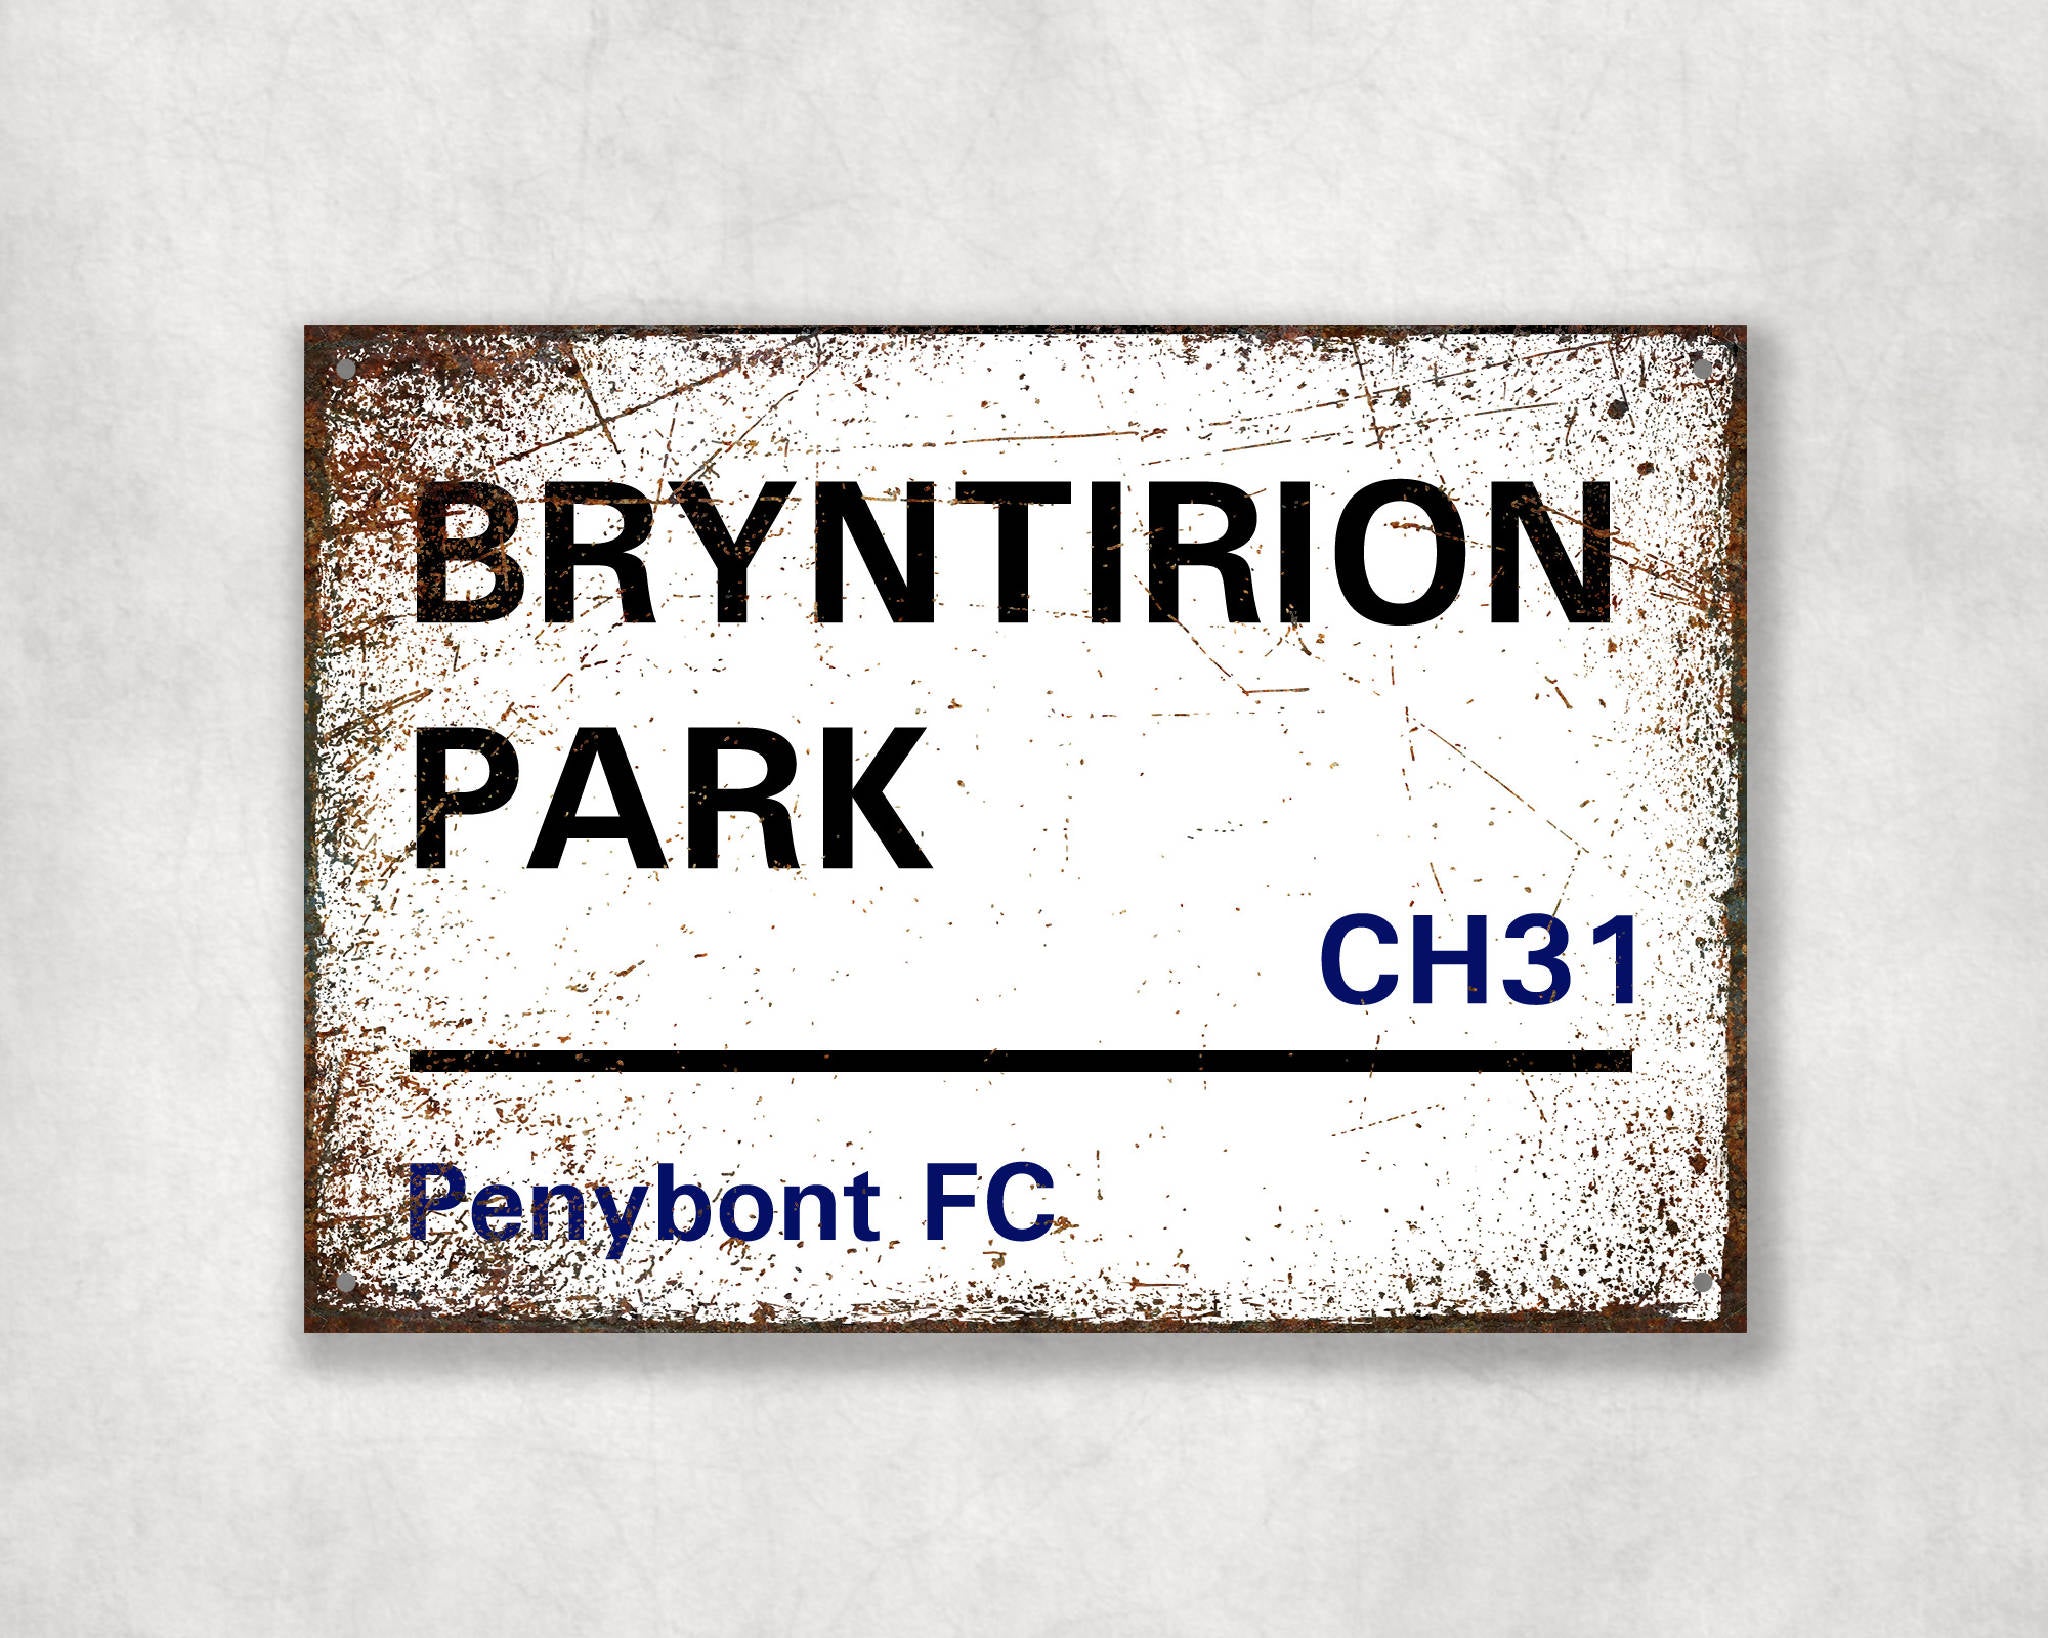 Bryntirion Park - Penybont FC aluminium printed metal street sign - gift, keepsake, football gift